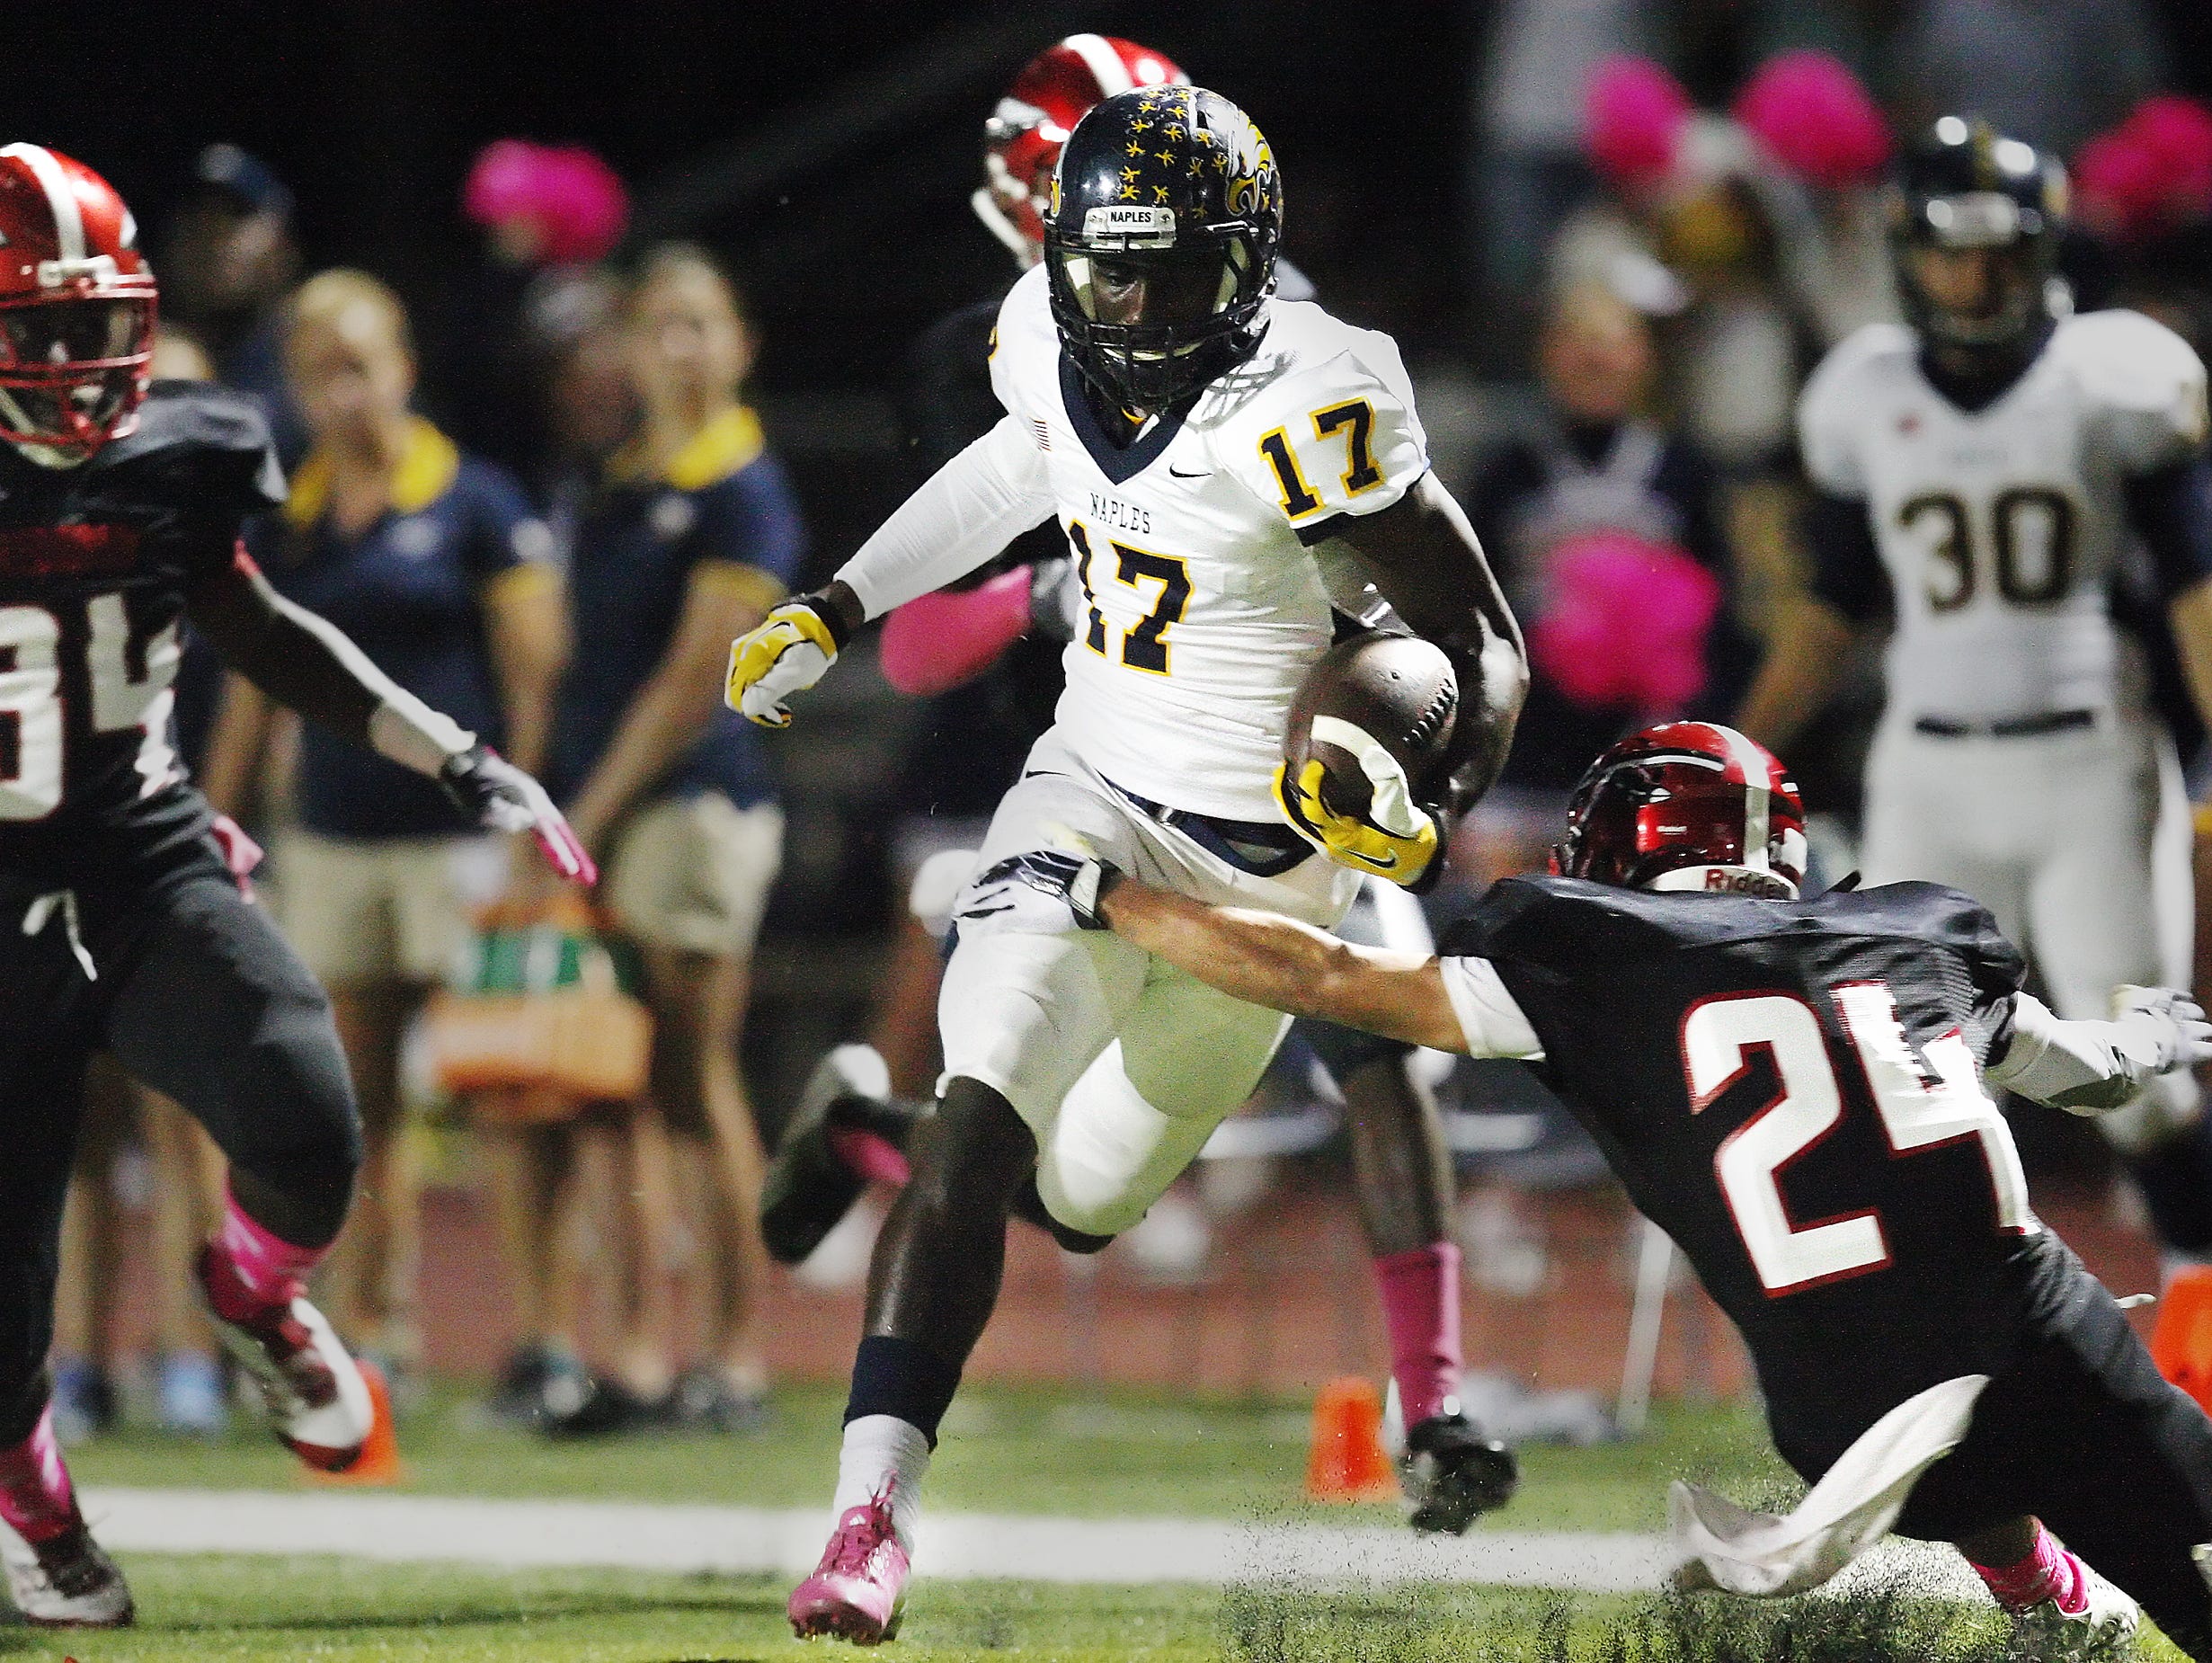 Naples High School's Tyler Byrd scores a touchdown against Immokalee last season at Immokalee High School.